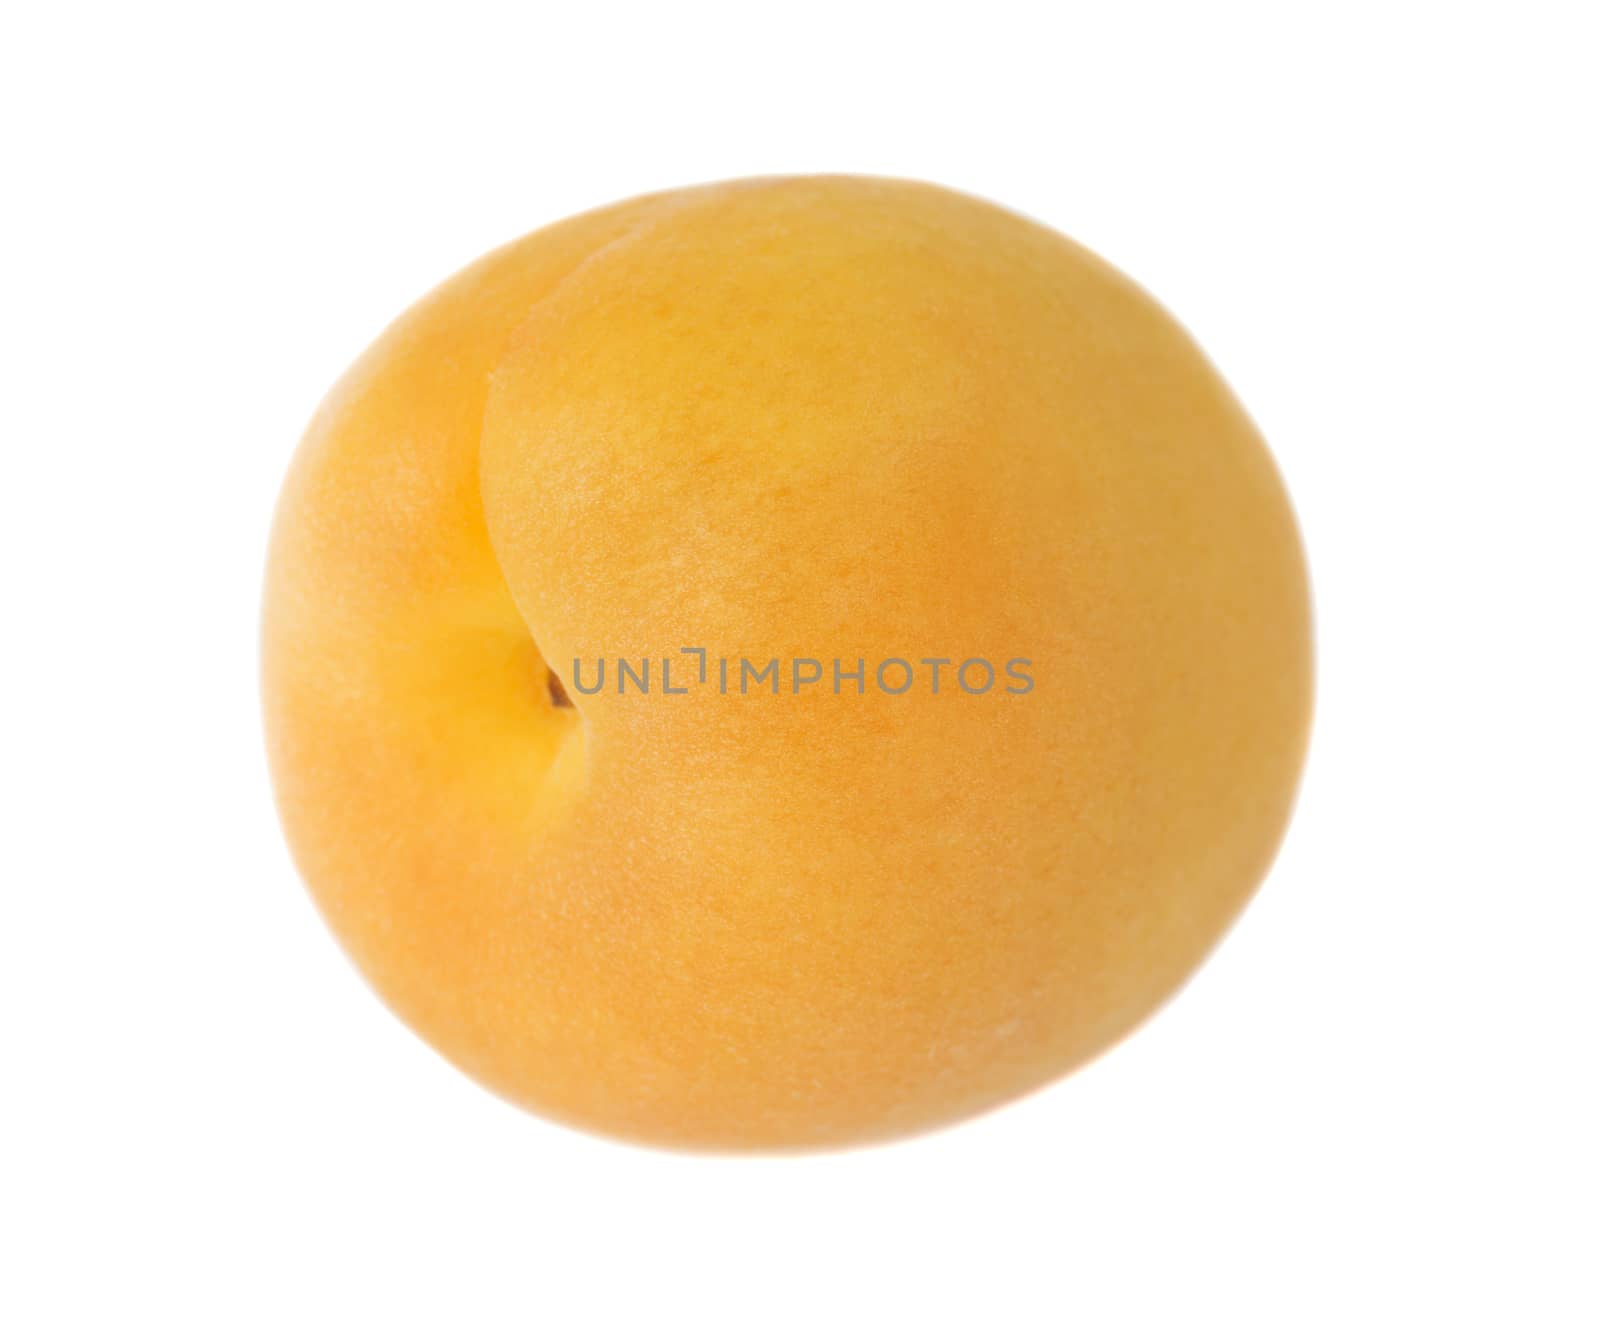 Orange apricot on a white background by Epitavi